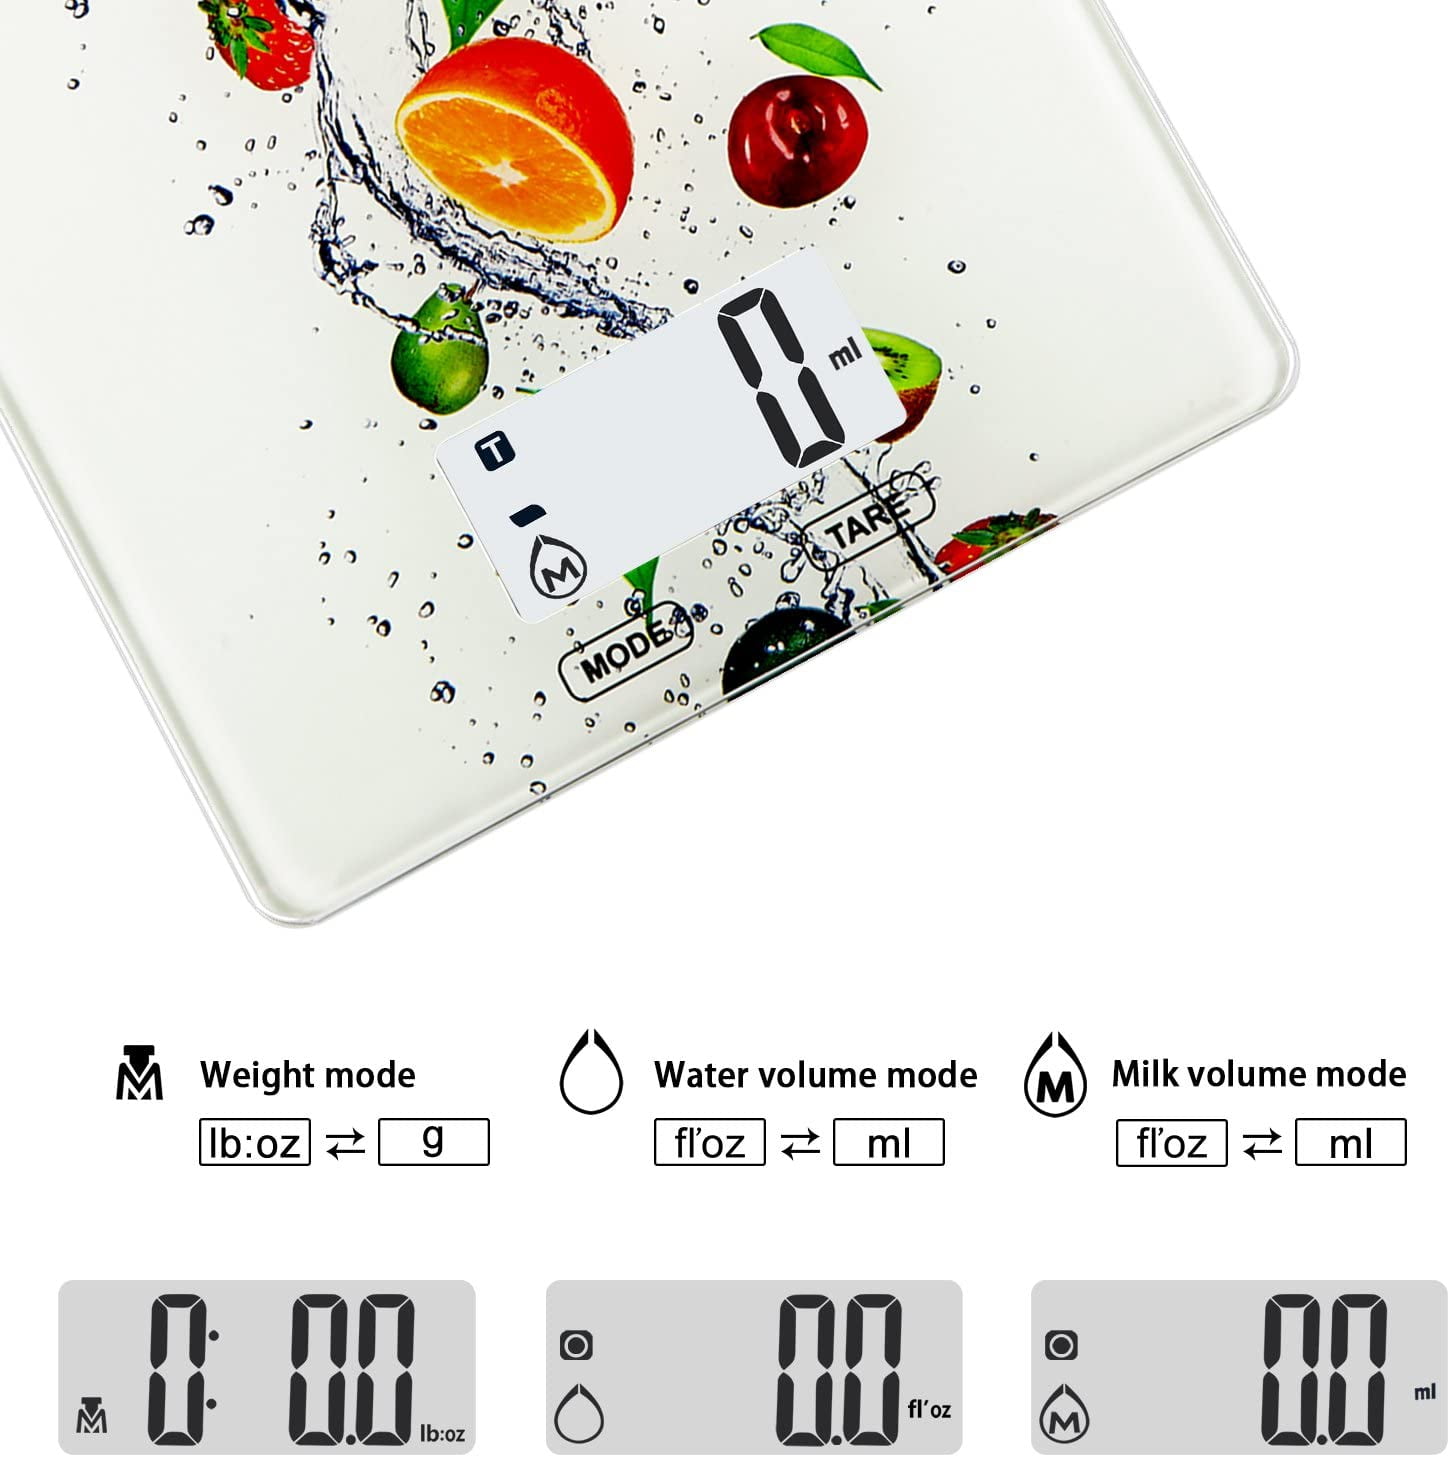 Digital Kitchen Scale/Food Scale - Ultra Slim, Multifunction